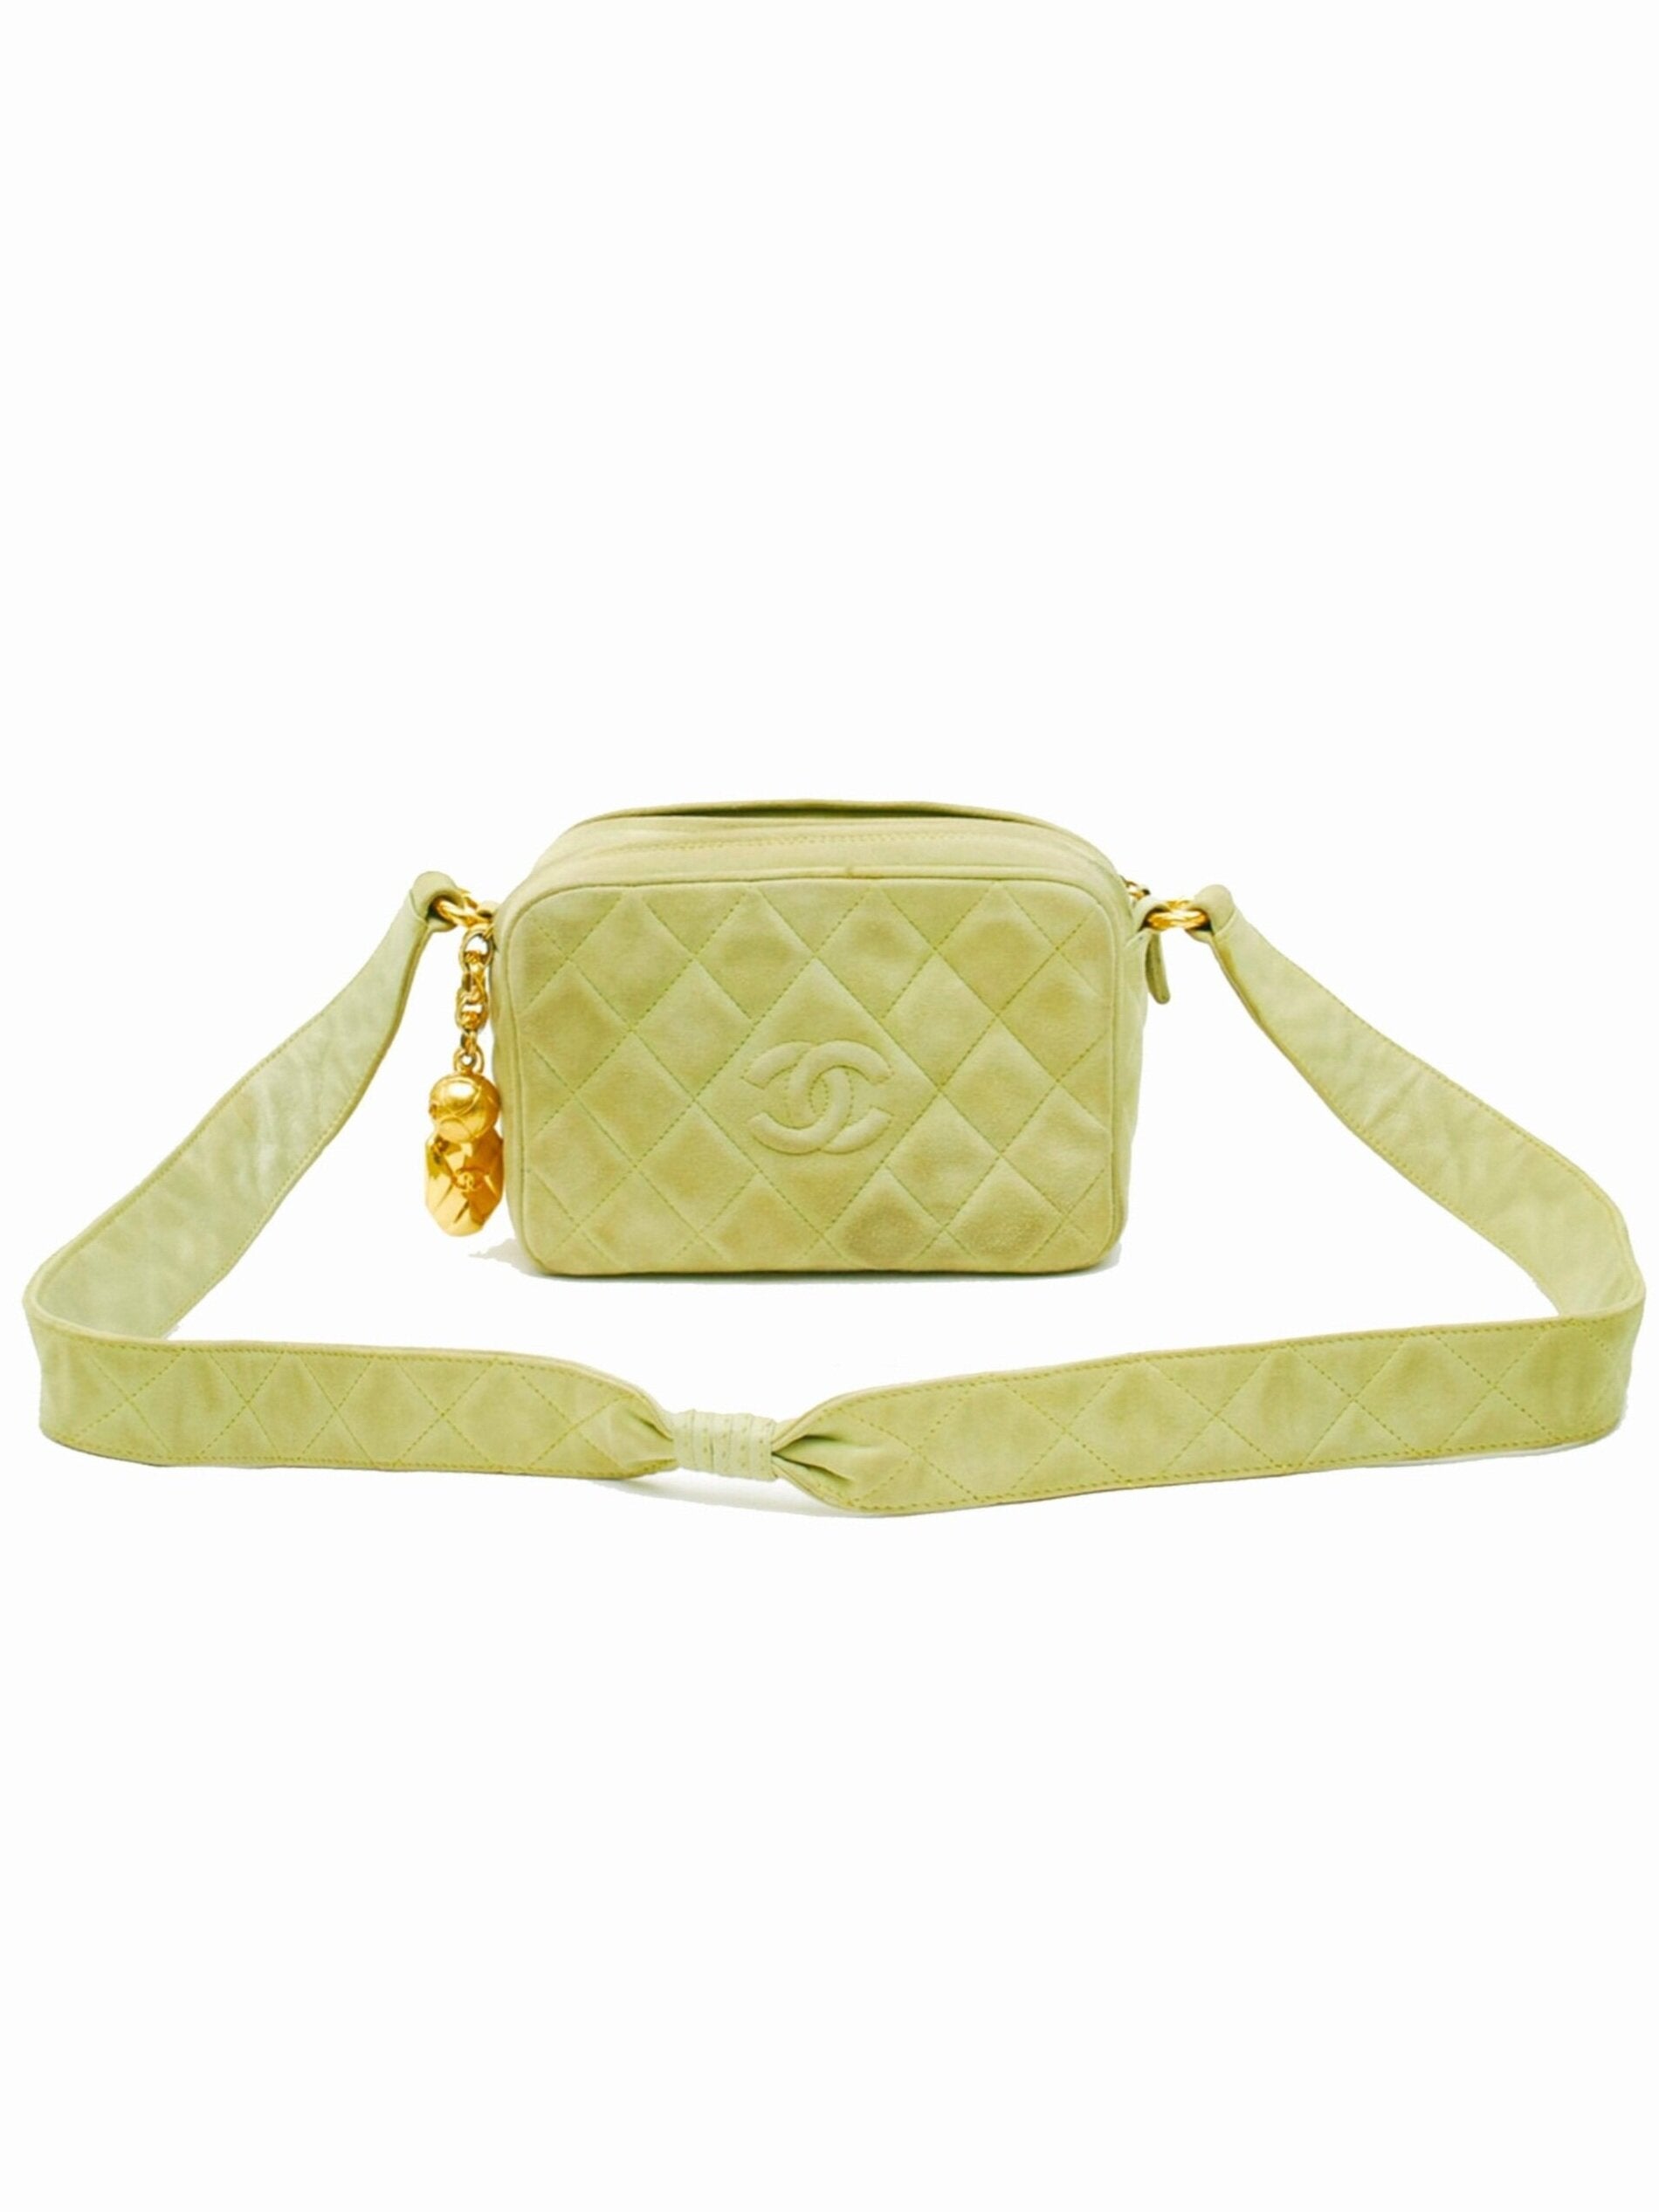 Chanel Suede Green Camera Shoulder Bag